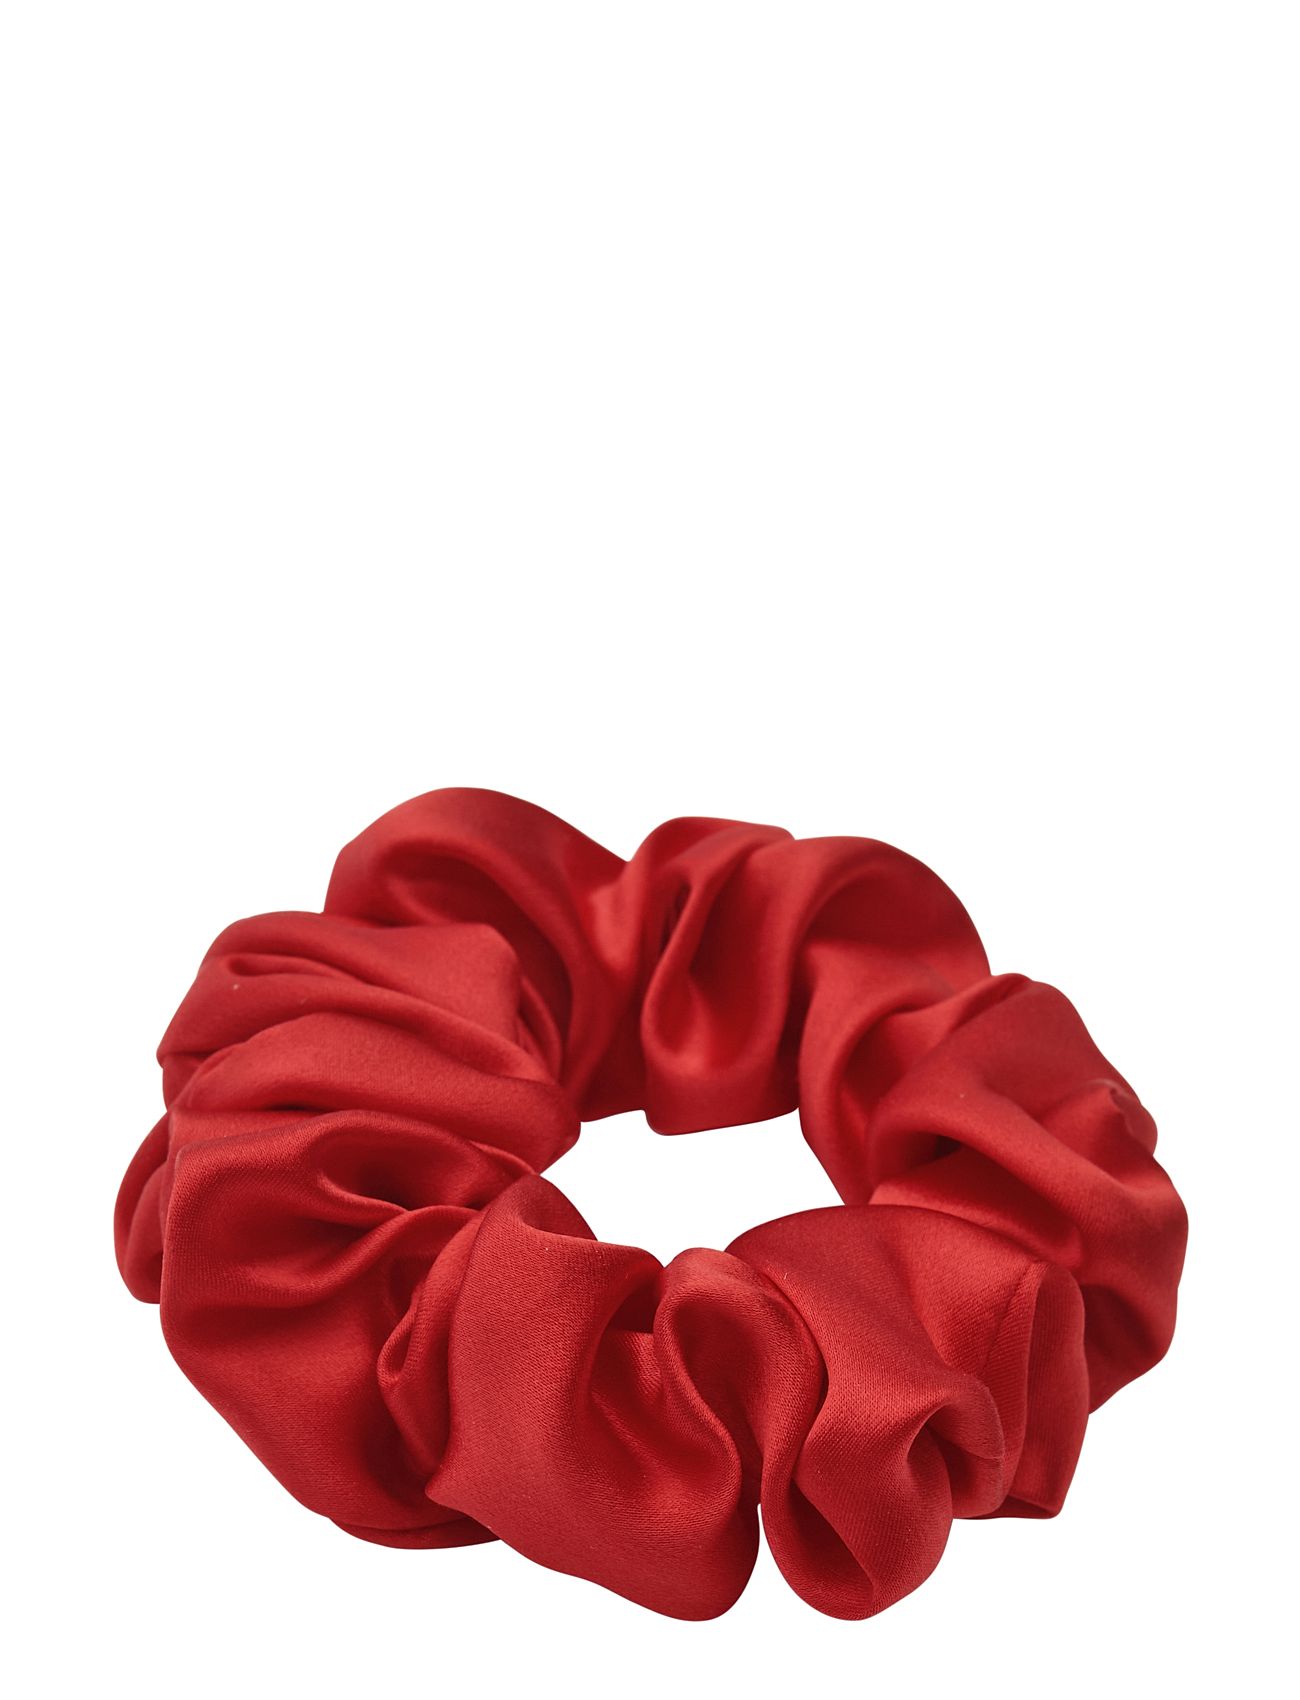 Mulberry Silk Scrunchie Accessories Hair Accessories Scrunchies Red Lenoites